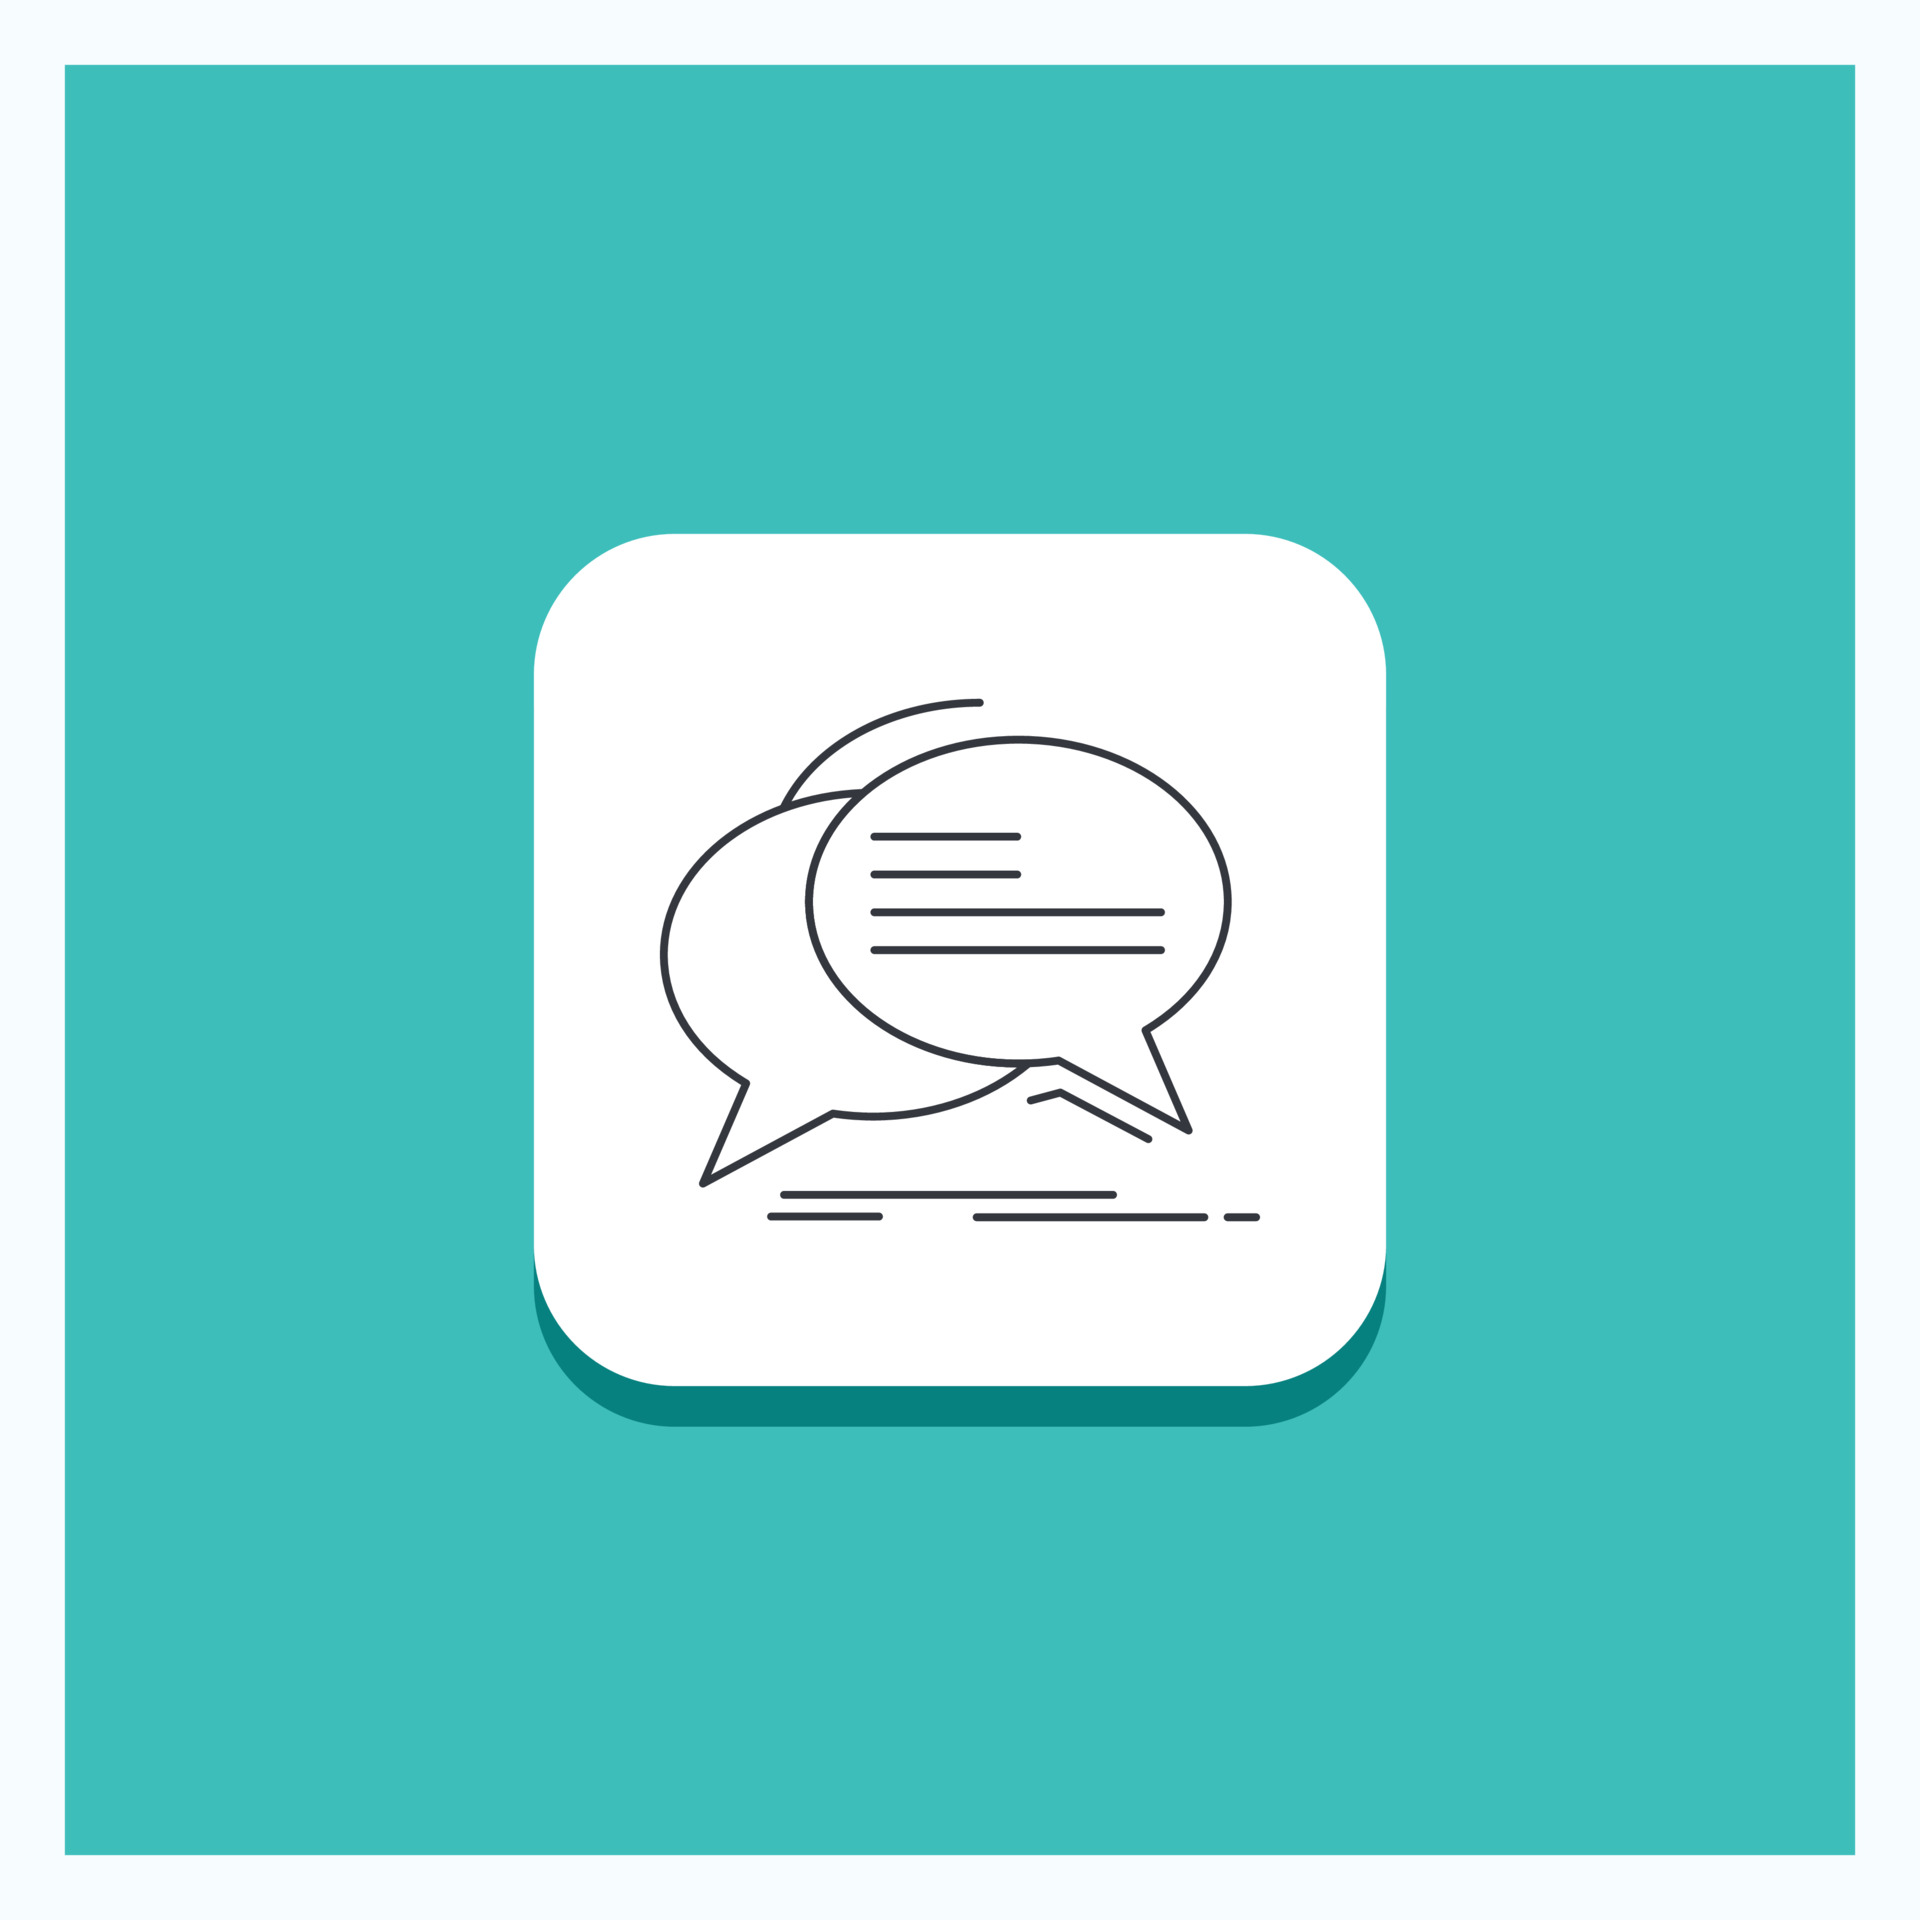 vecteezy_round-button-for-bubble-chat-communication-speech-talk_12920001